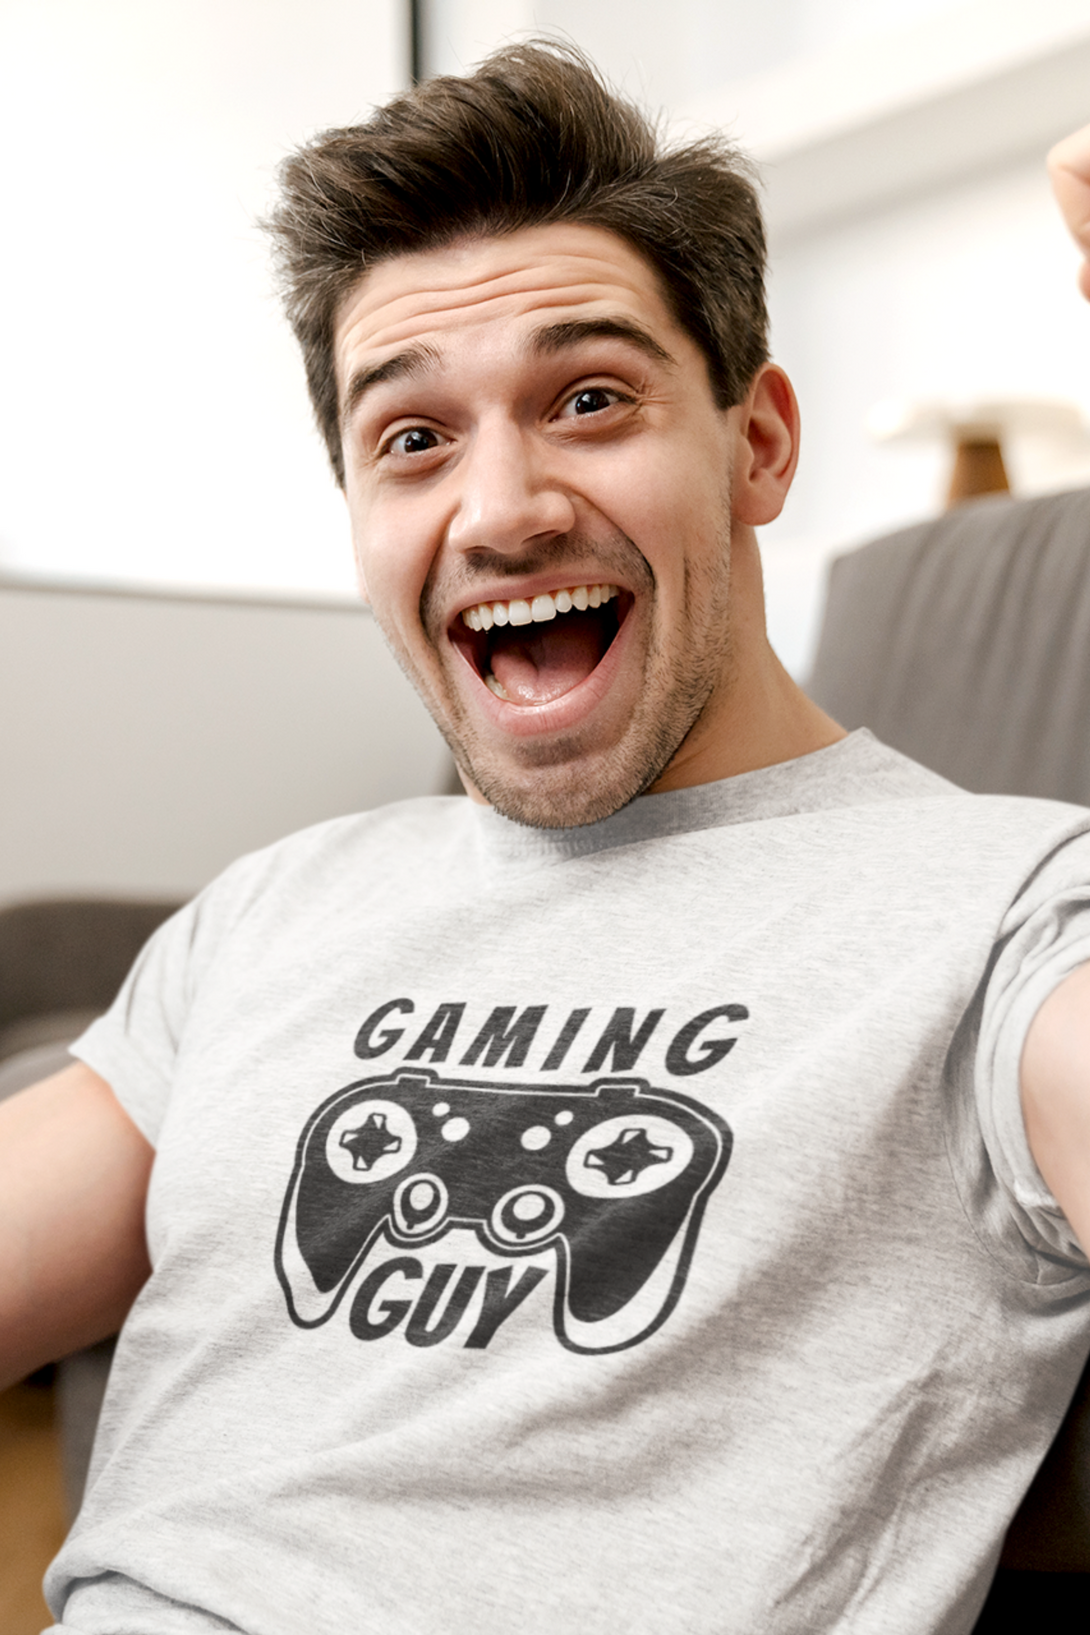 Gaming Guy Printed T-Shirt For Men - WowWaves - 4